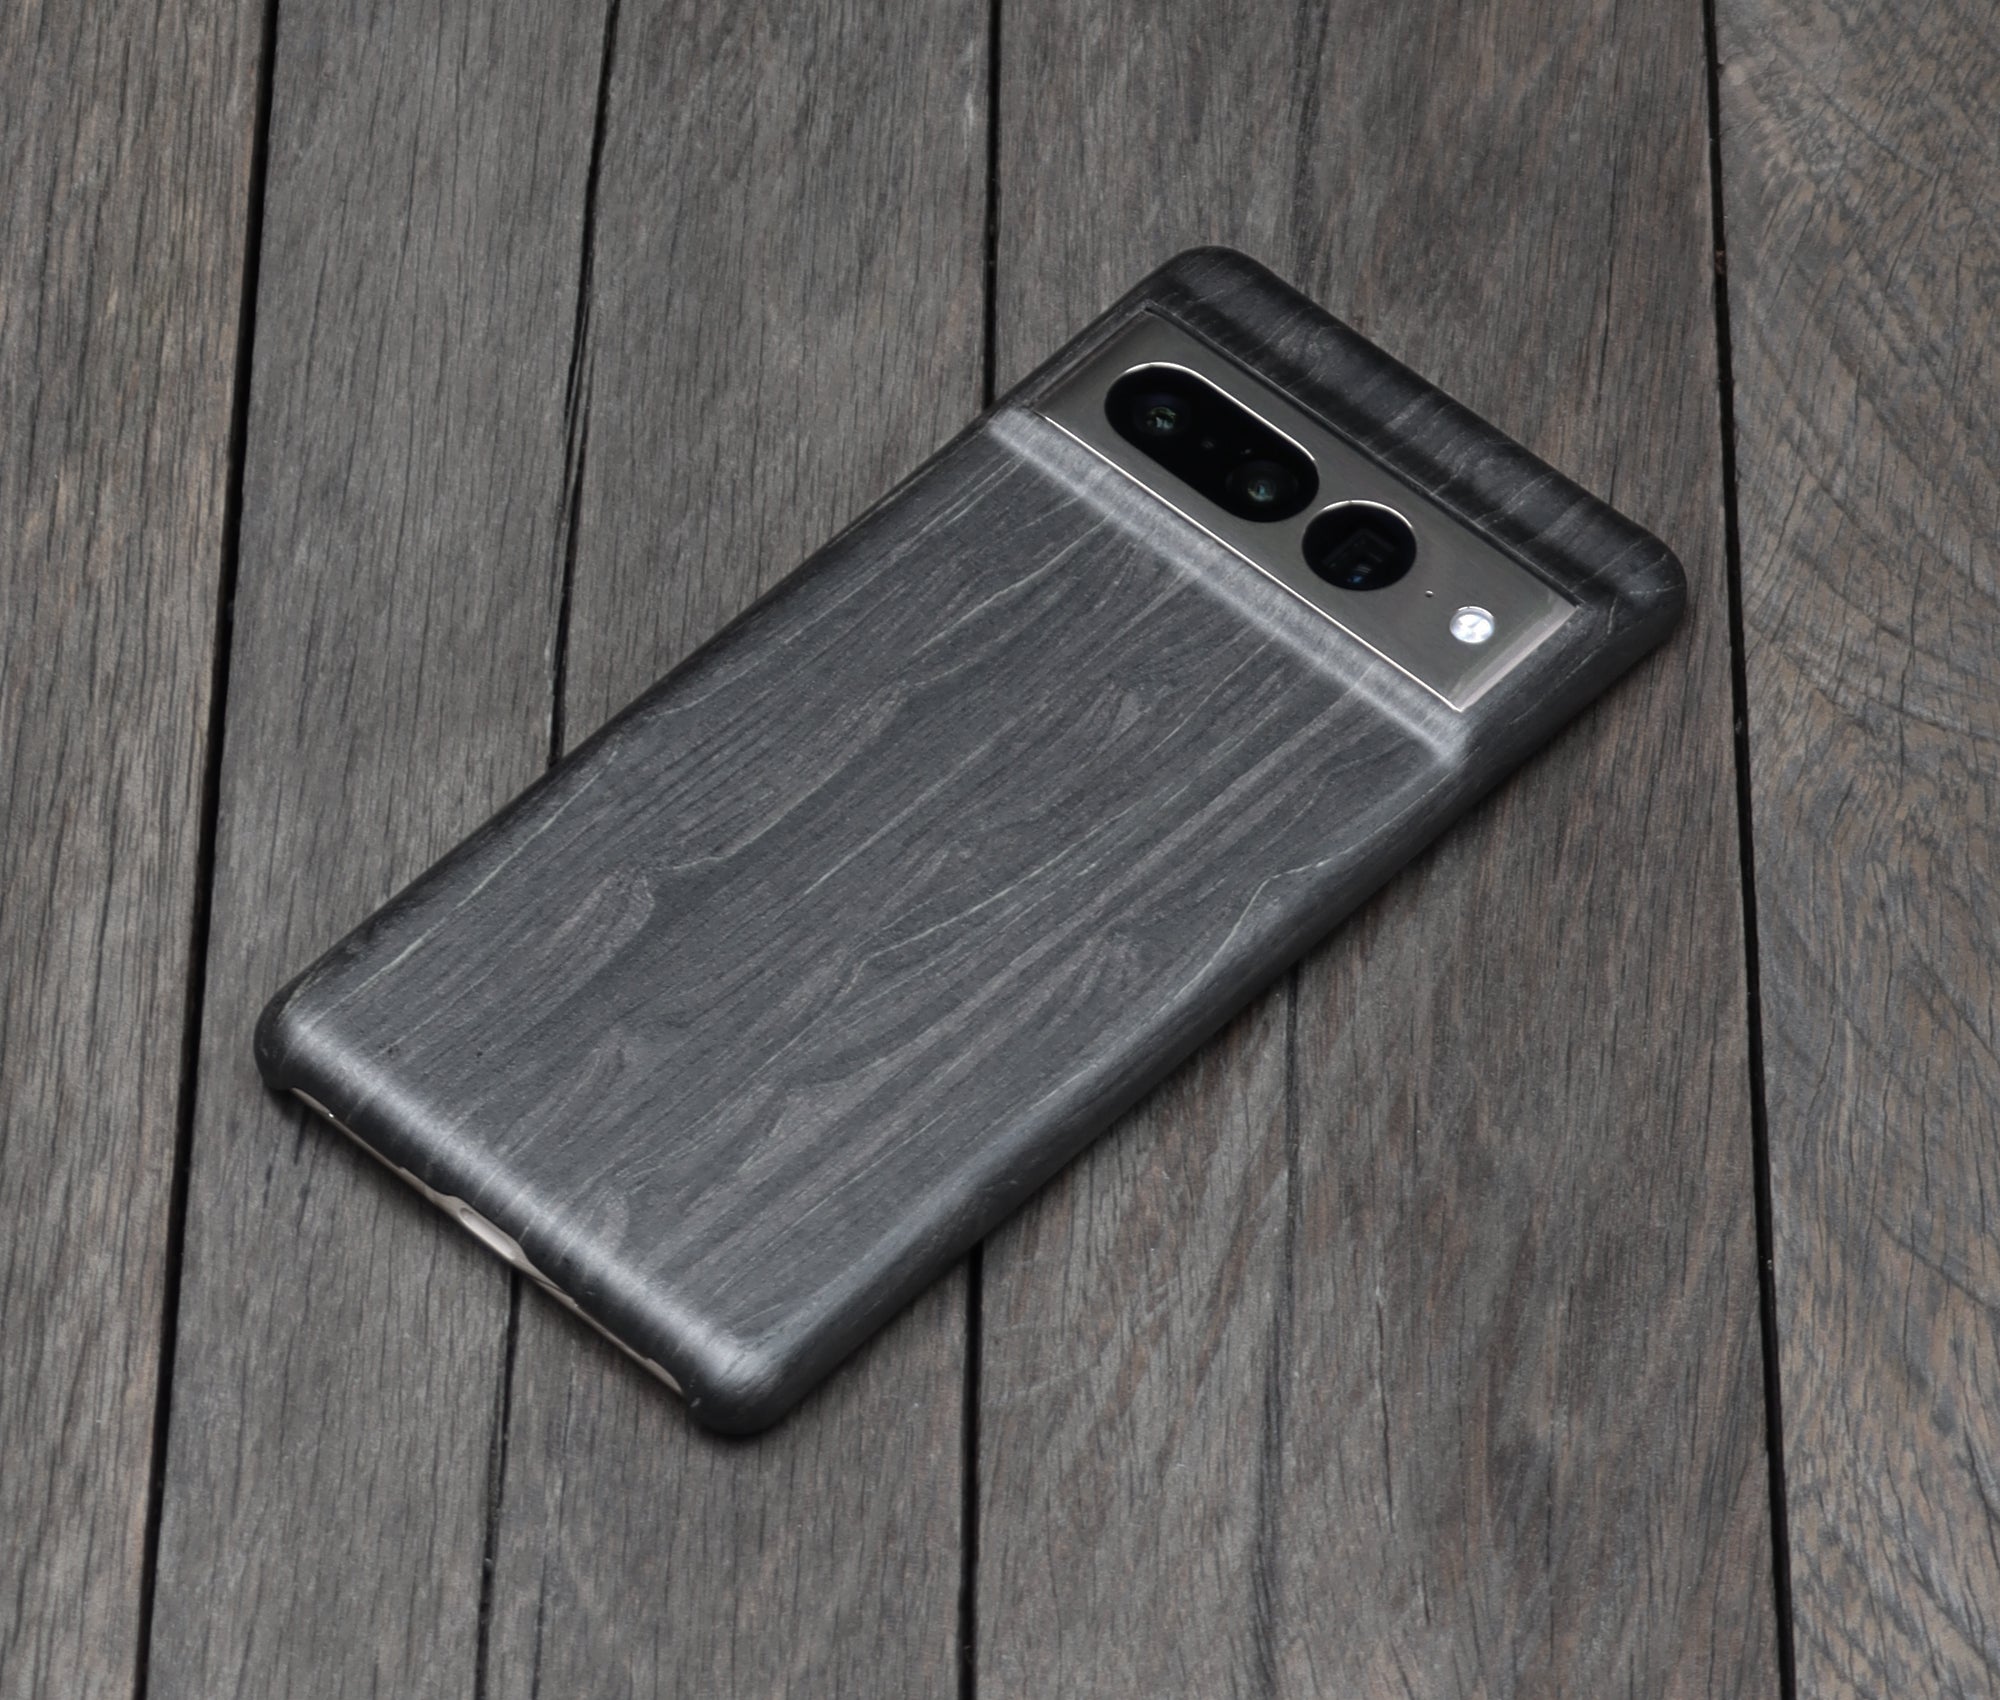 Lacrosse (LAX) Sticks Design Wood Case For Google Pixel 7 Pro